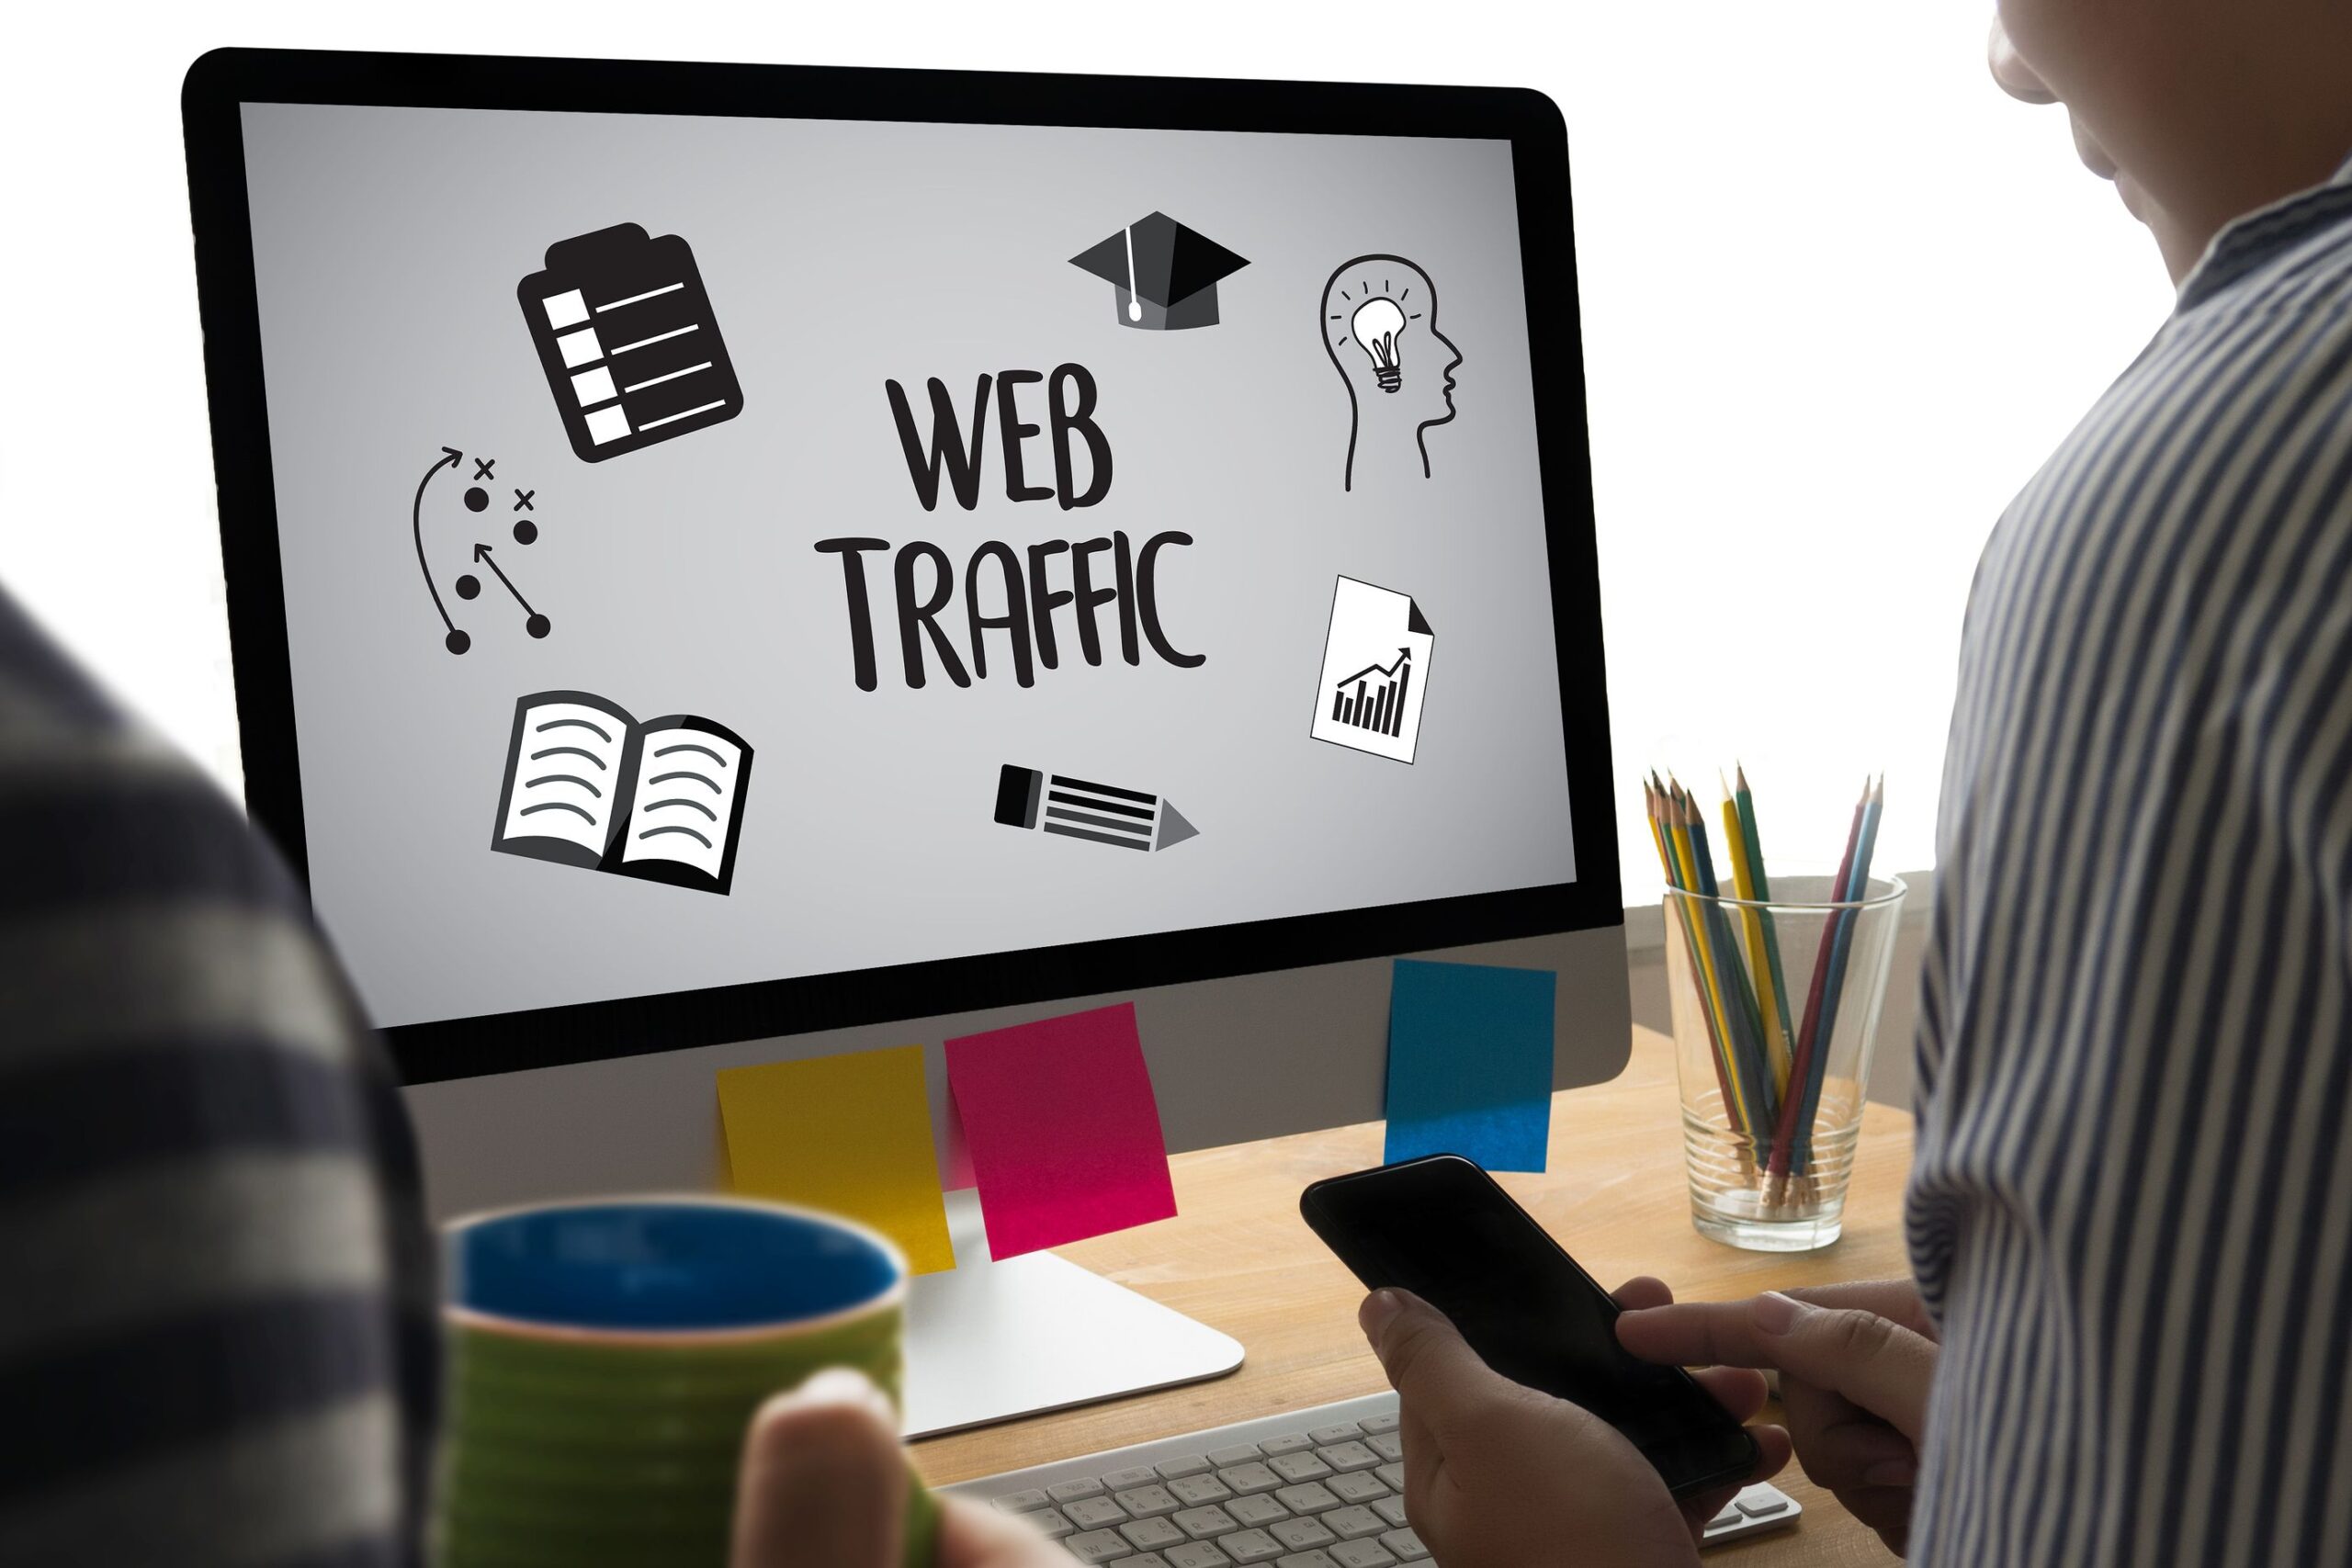 Web-Traffic-business-Technol-166581227.4b2ff768